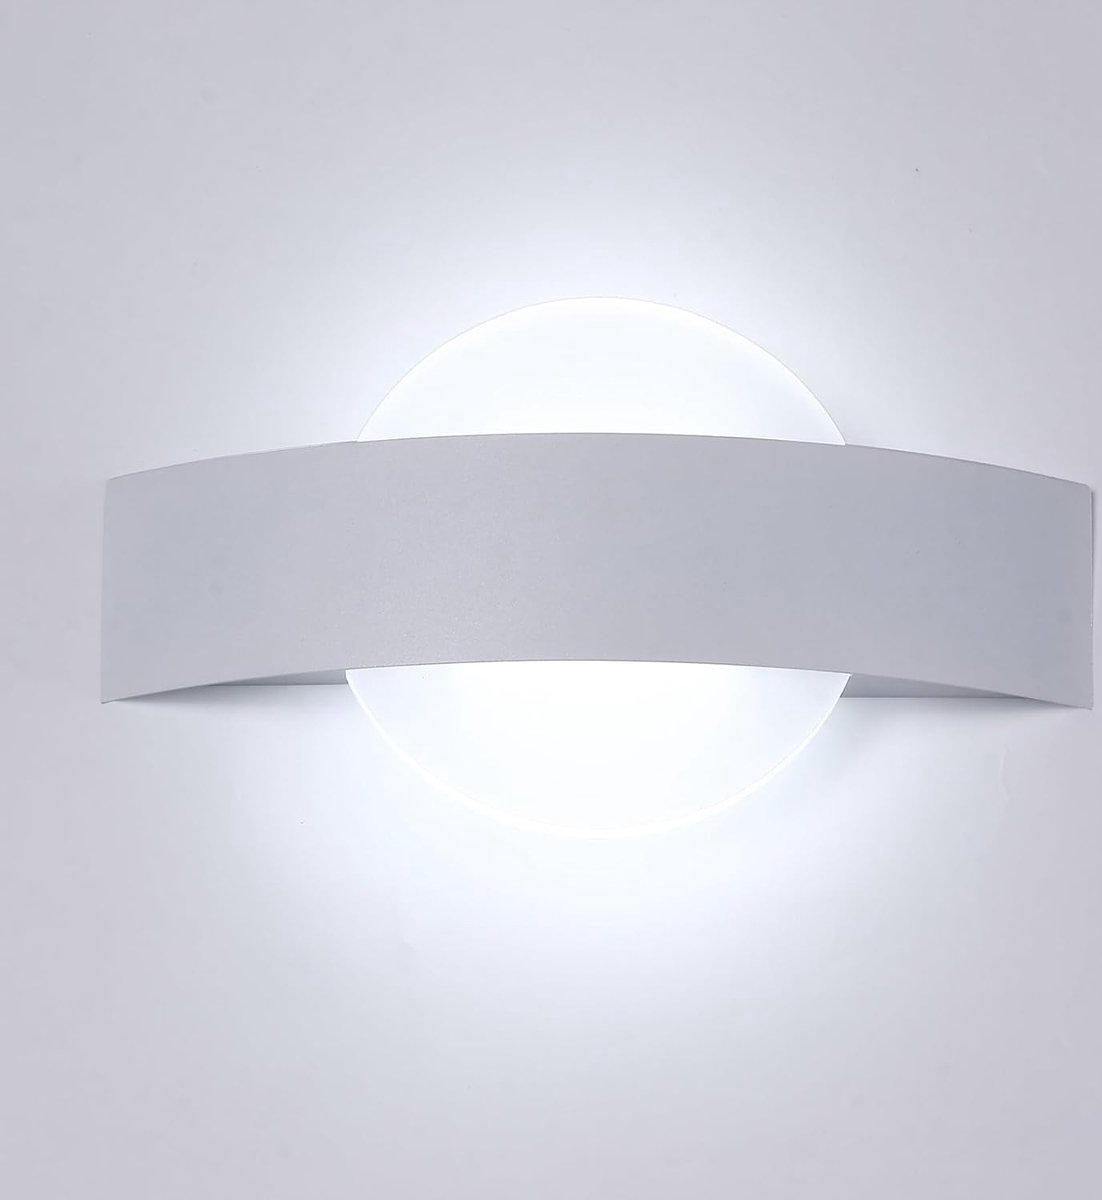 Goeco wandlamp - 24cm - Medium - LED - 12W - 1350LM - koel wit licht - 6500K - acryl - aluminium - voor slaapkamer woonkamer hal trap